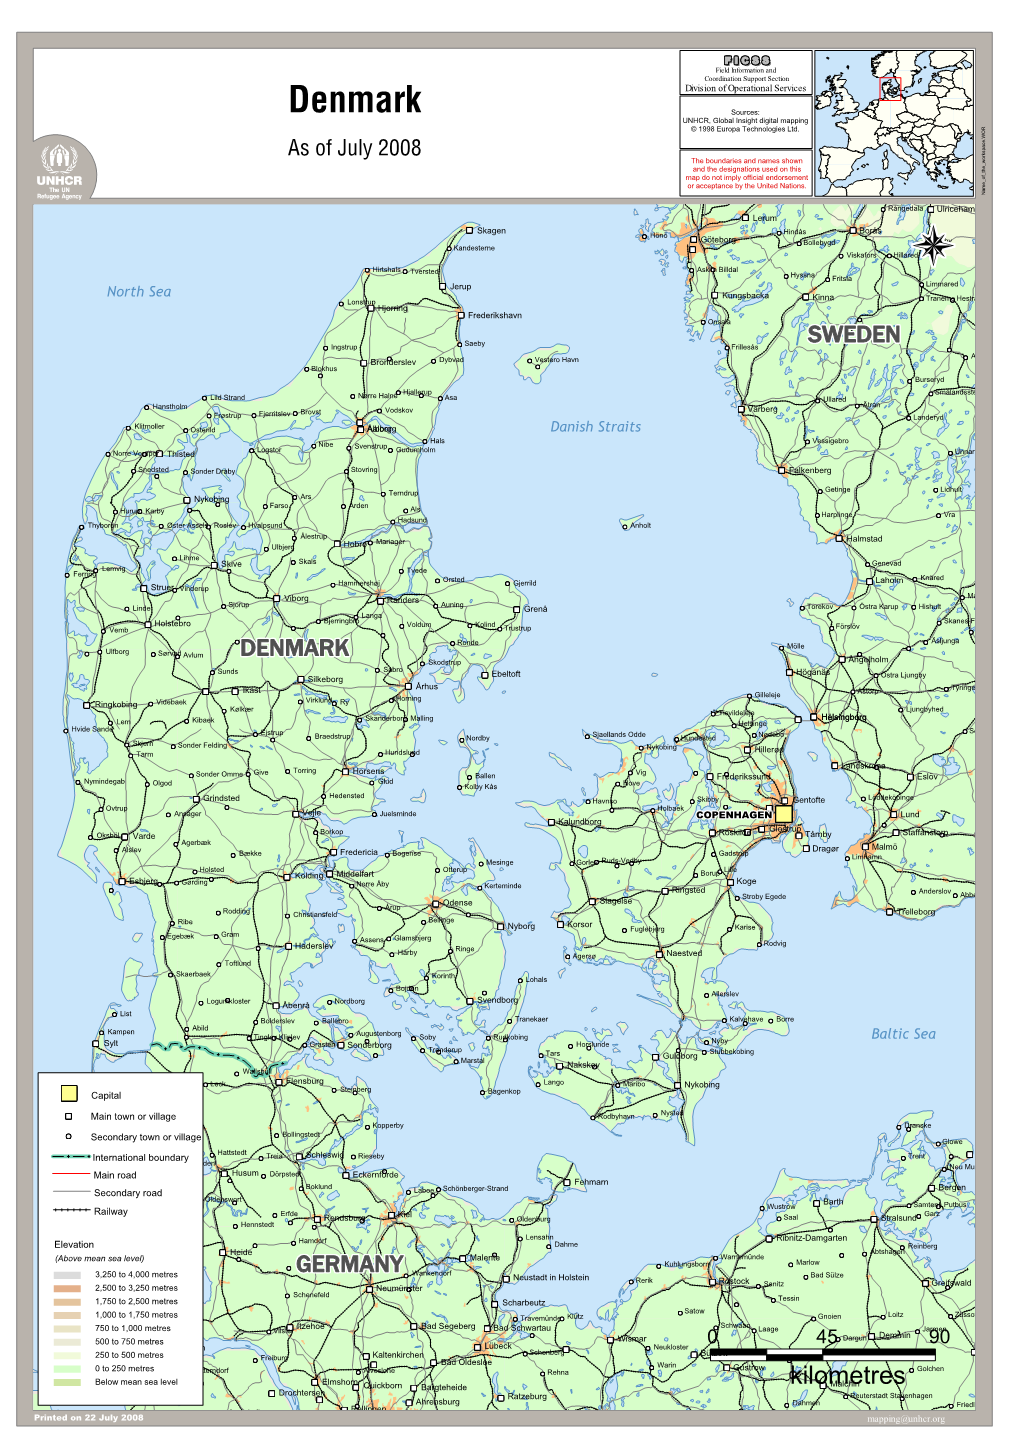 Denmark Sources: UNHCR, Global Insight Digital Mapping © 1998 Europa Technologies Ltd